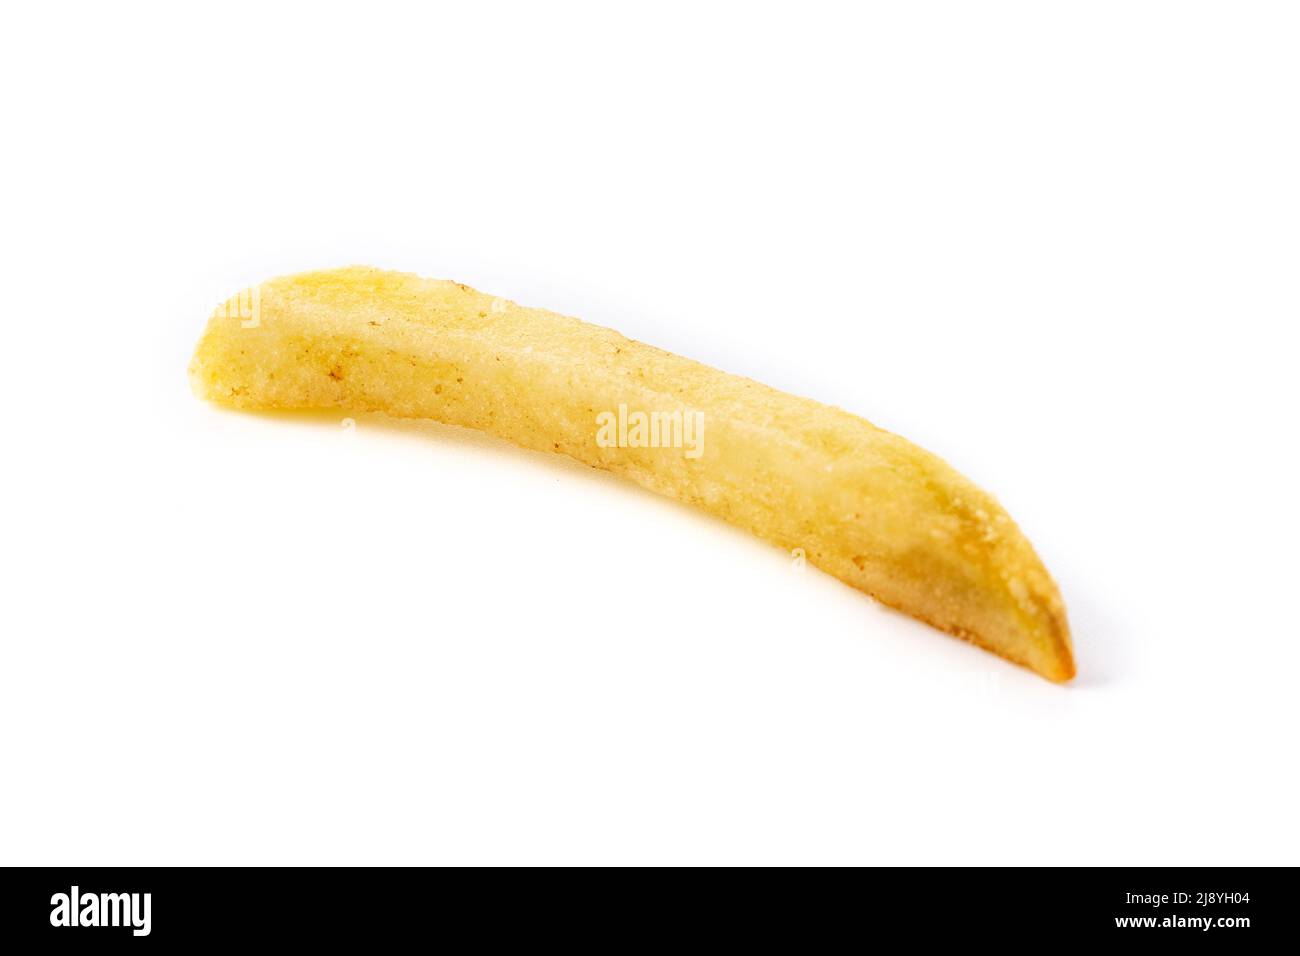 Fried potato, french fries isolated on white background Stock Photo